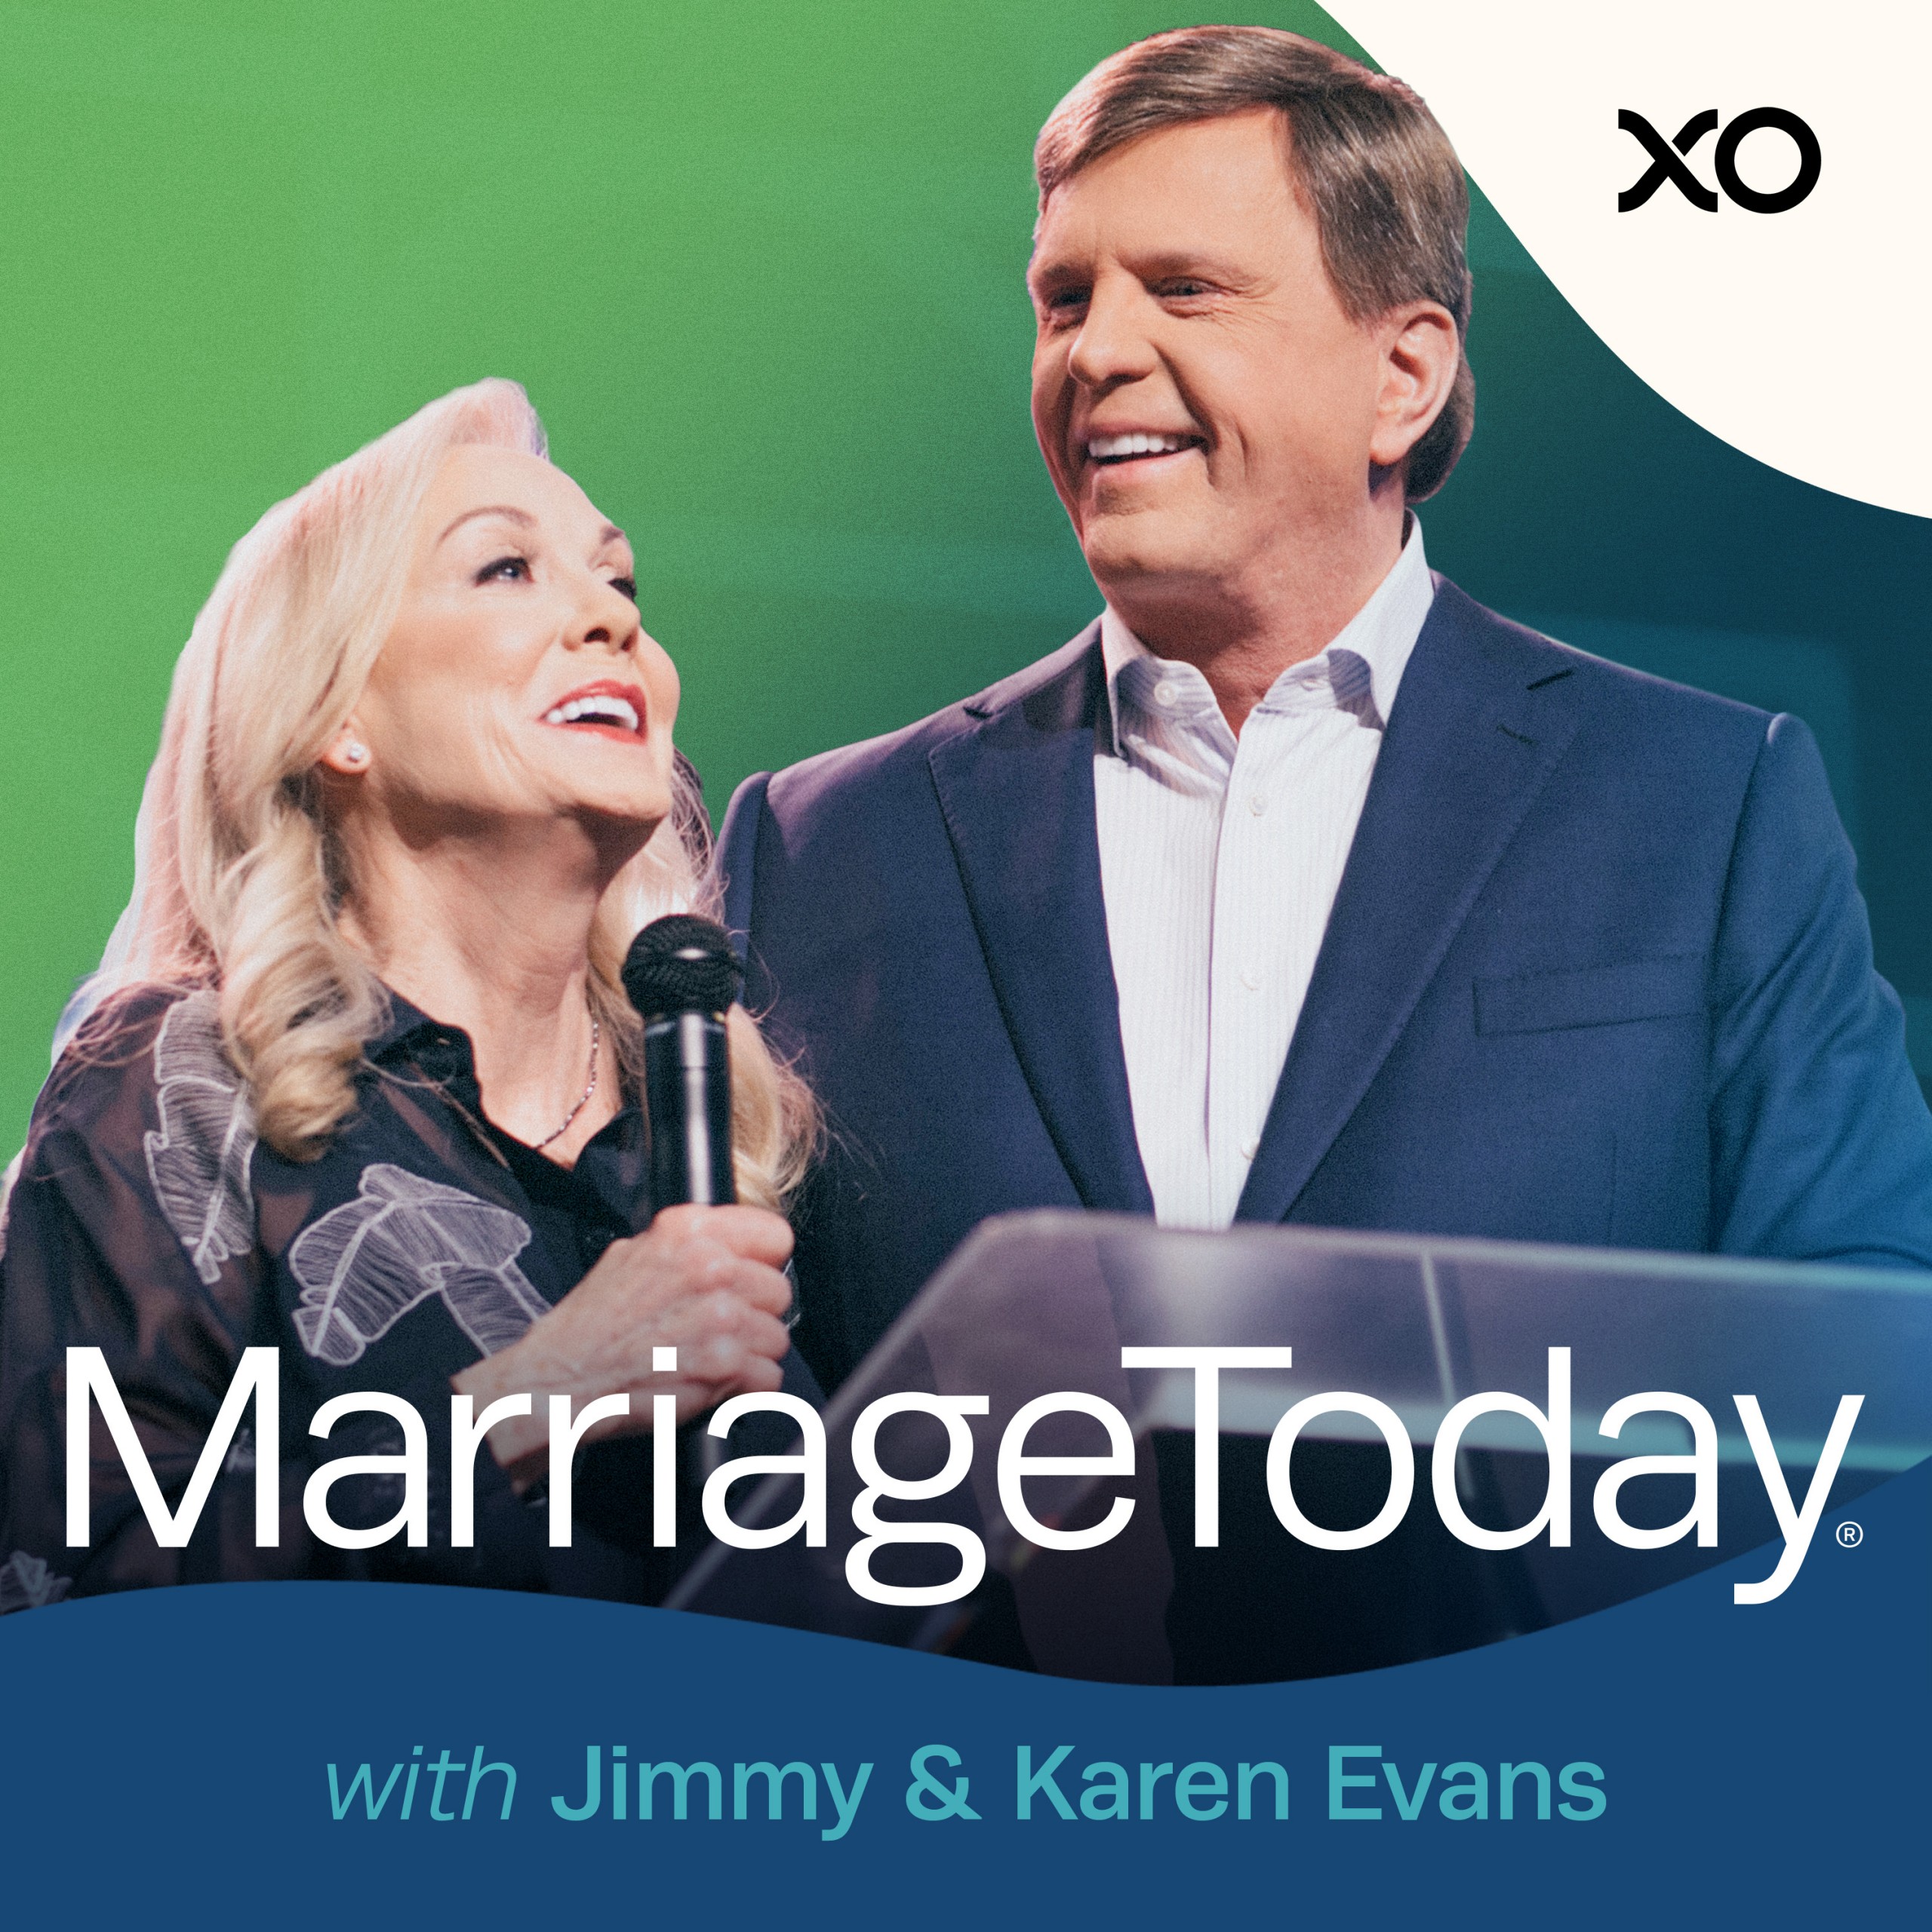 MarriageToday Jimmy & Karen Evans Podcast XO Marriage